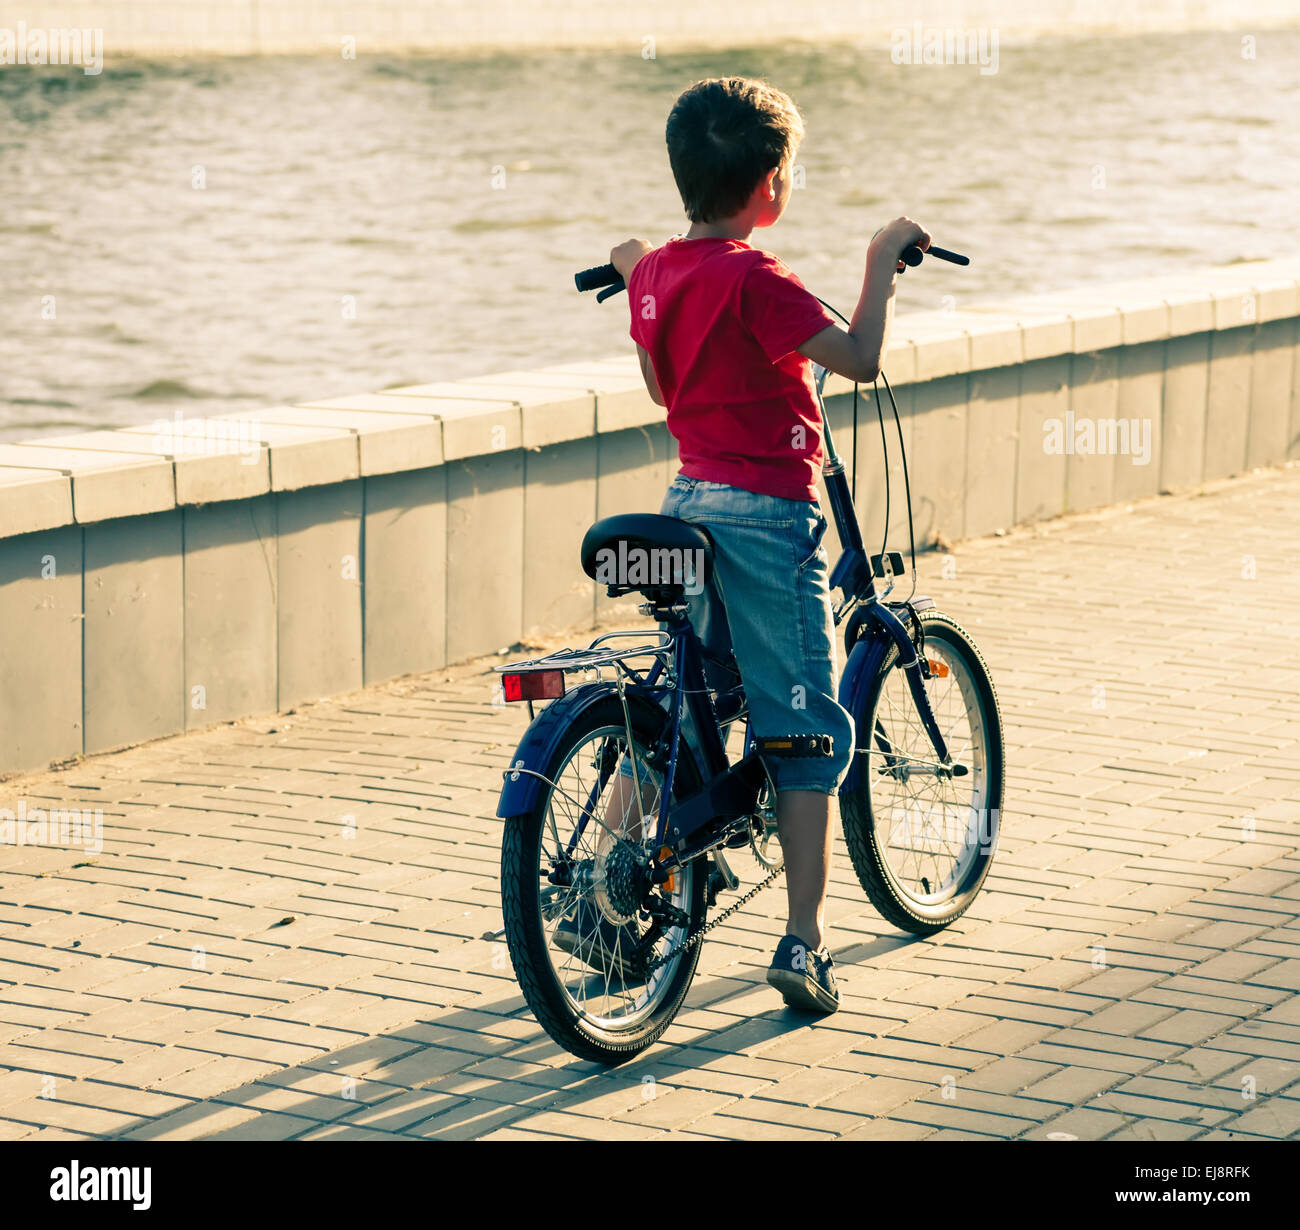 Backside view of a boy on bike near water Stock Photo